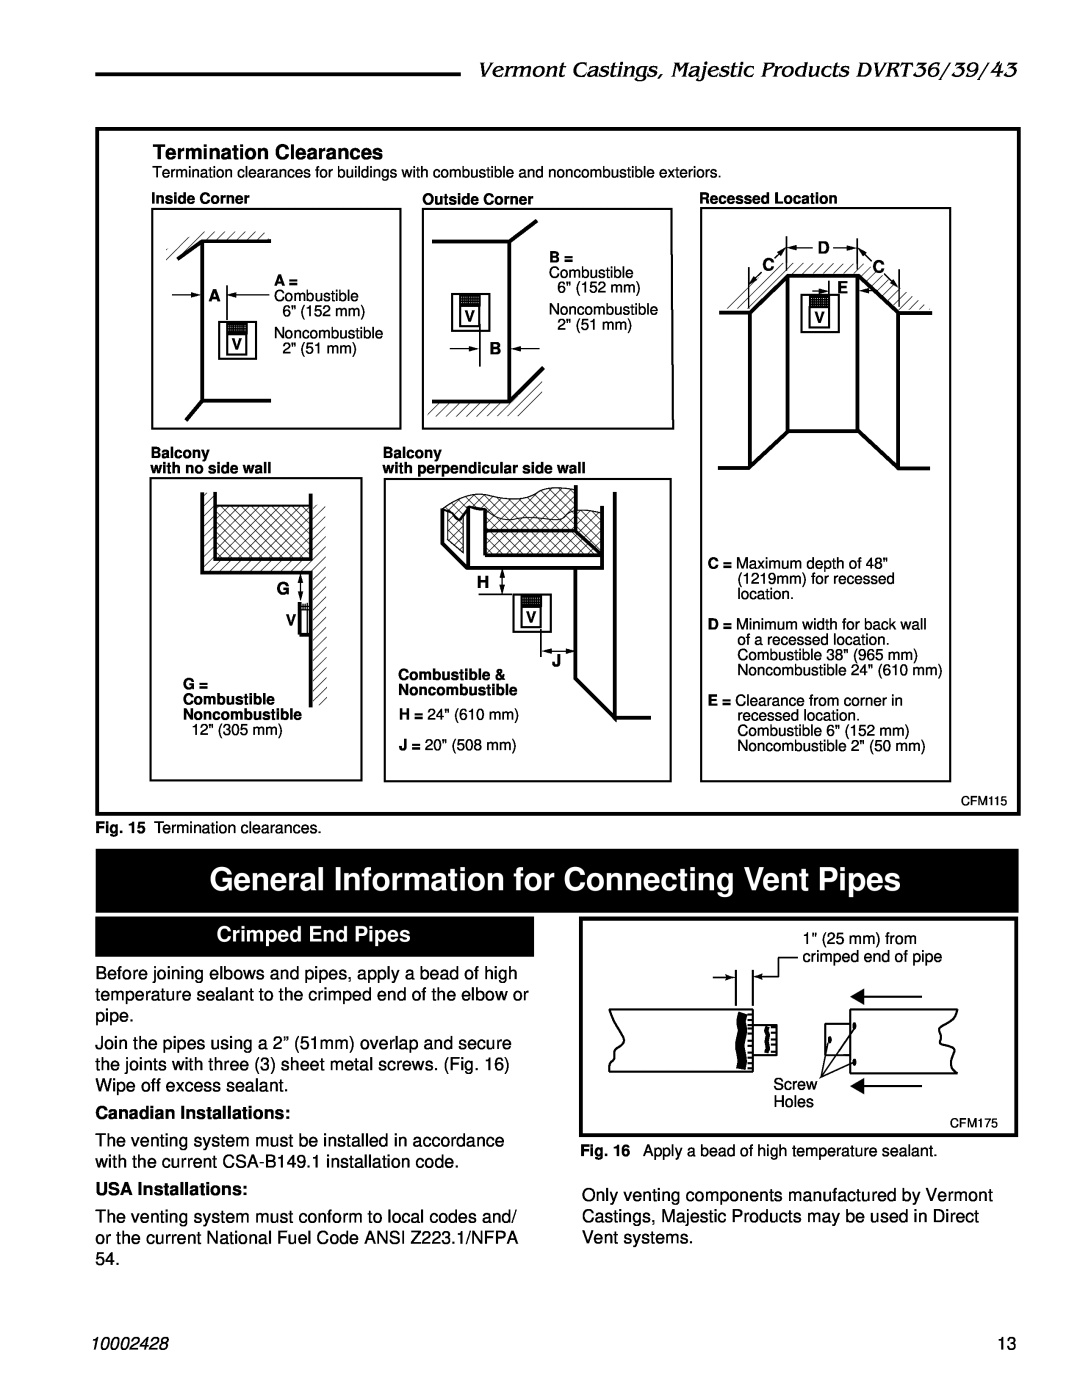 Vermont Casting DVRT36, DVRT43, DVRT39 manual General Information for Connecting Vent Pipes, Crimped End Pipes, 10002428 